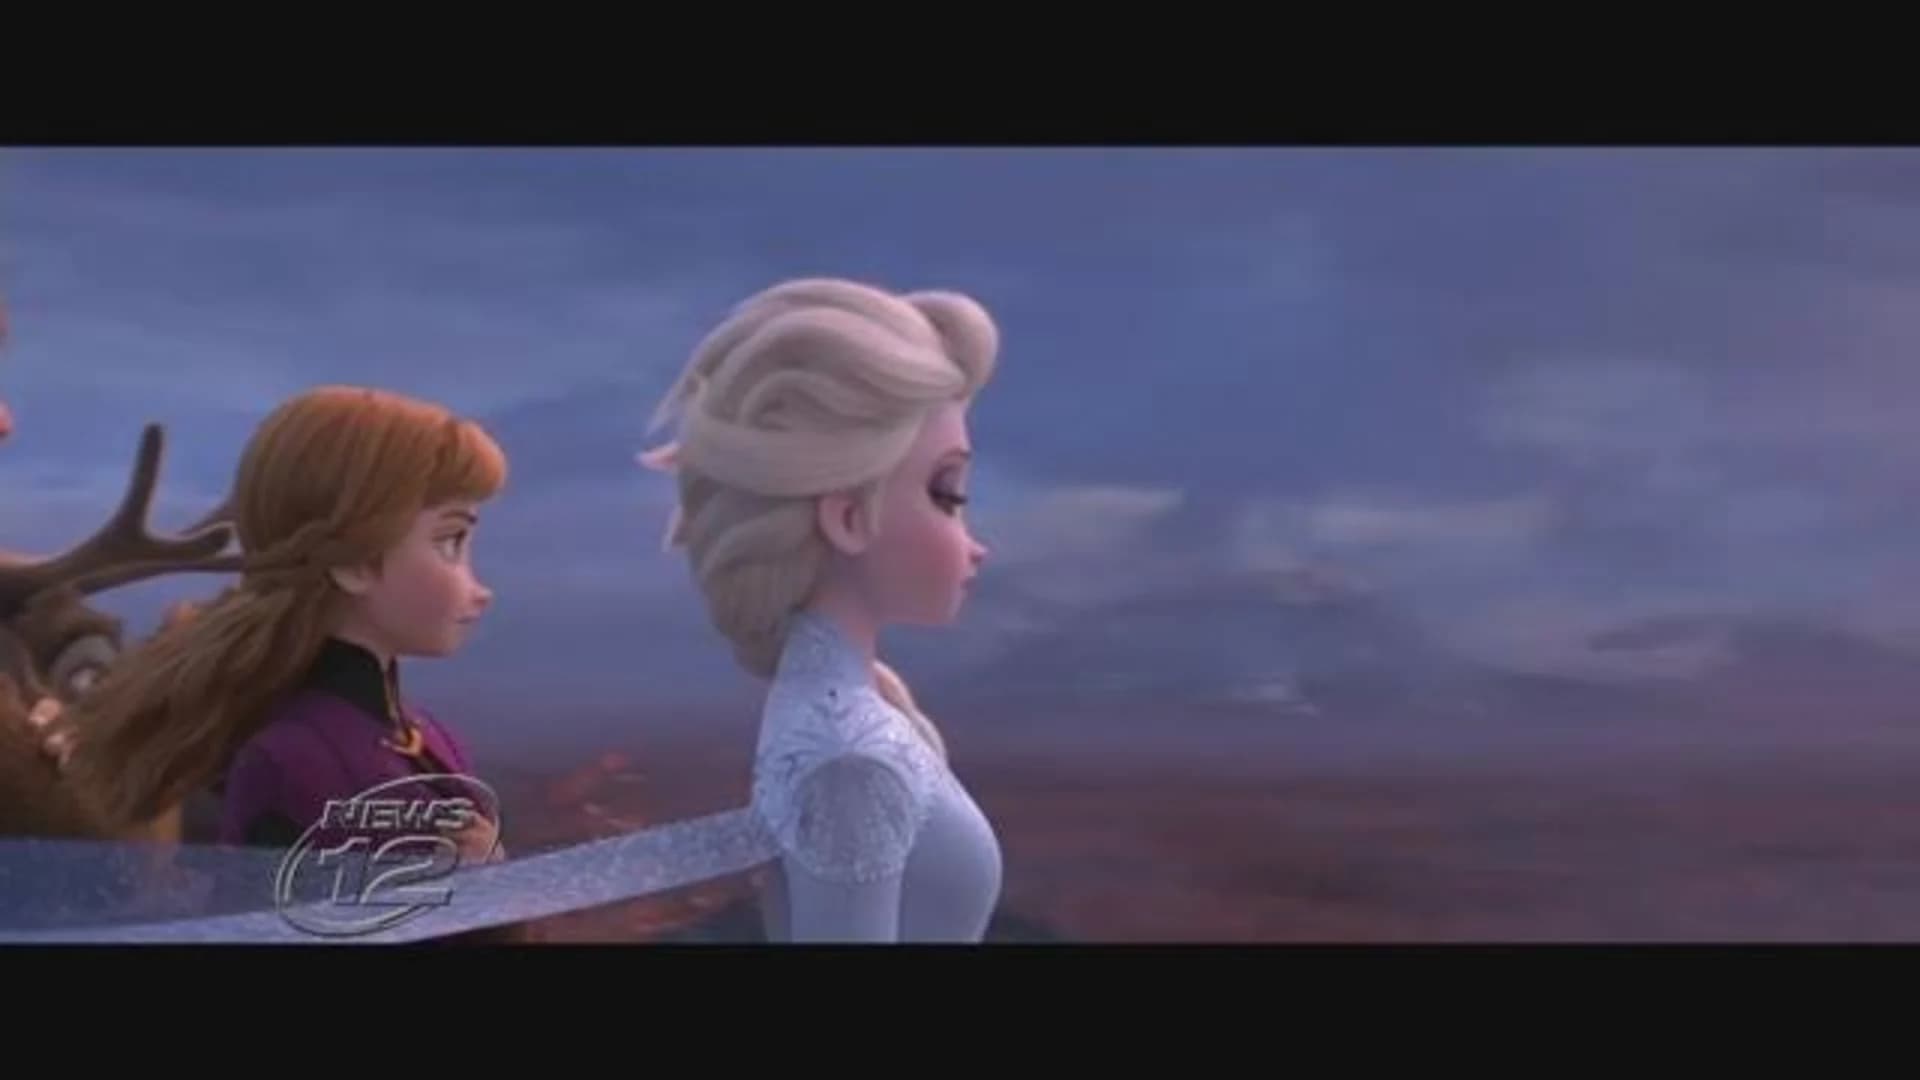 Buzz swirls around possibility Elsa has a girlfriend in ‘Frozen 2’